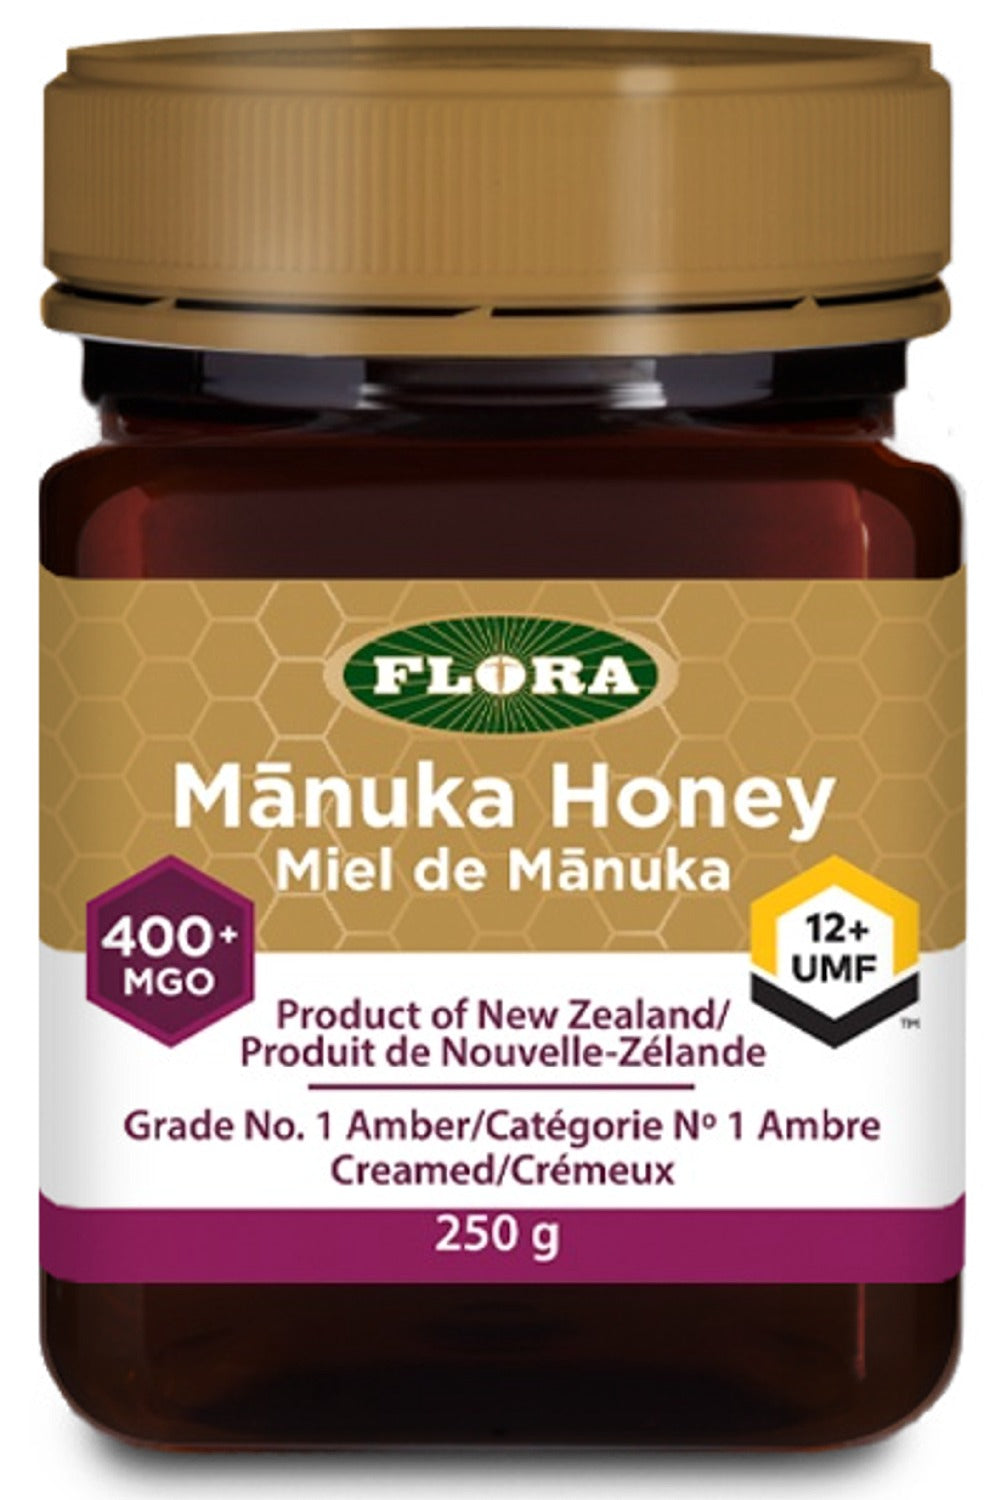 Flora Manuka Honey MGO 400+/12+ UMF ( gr